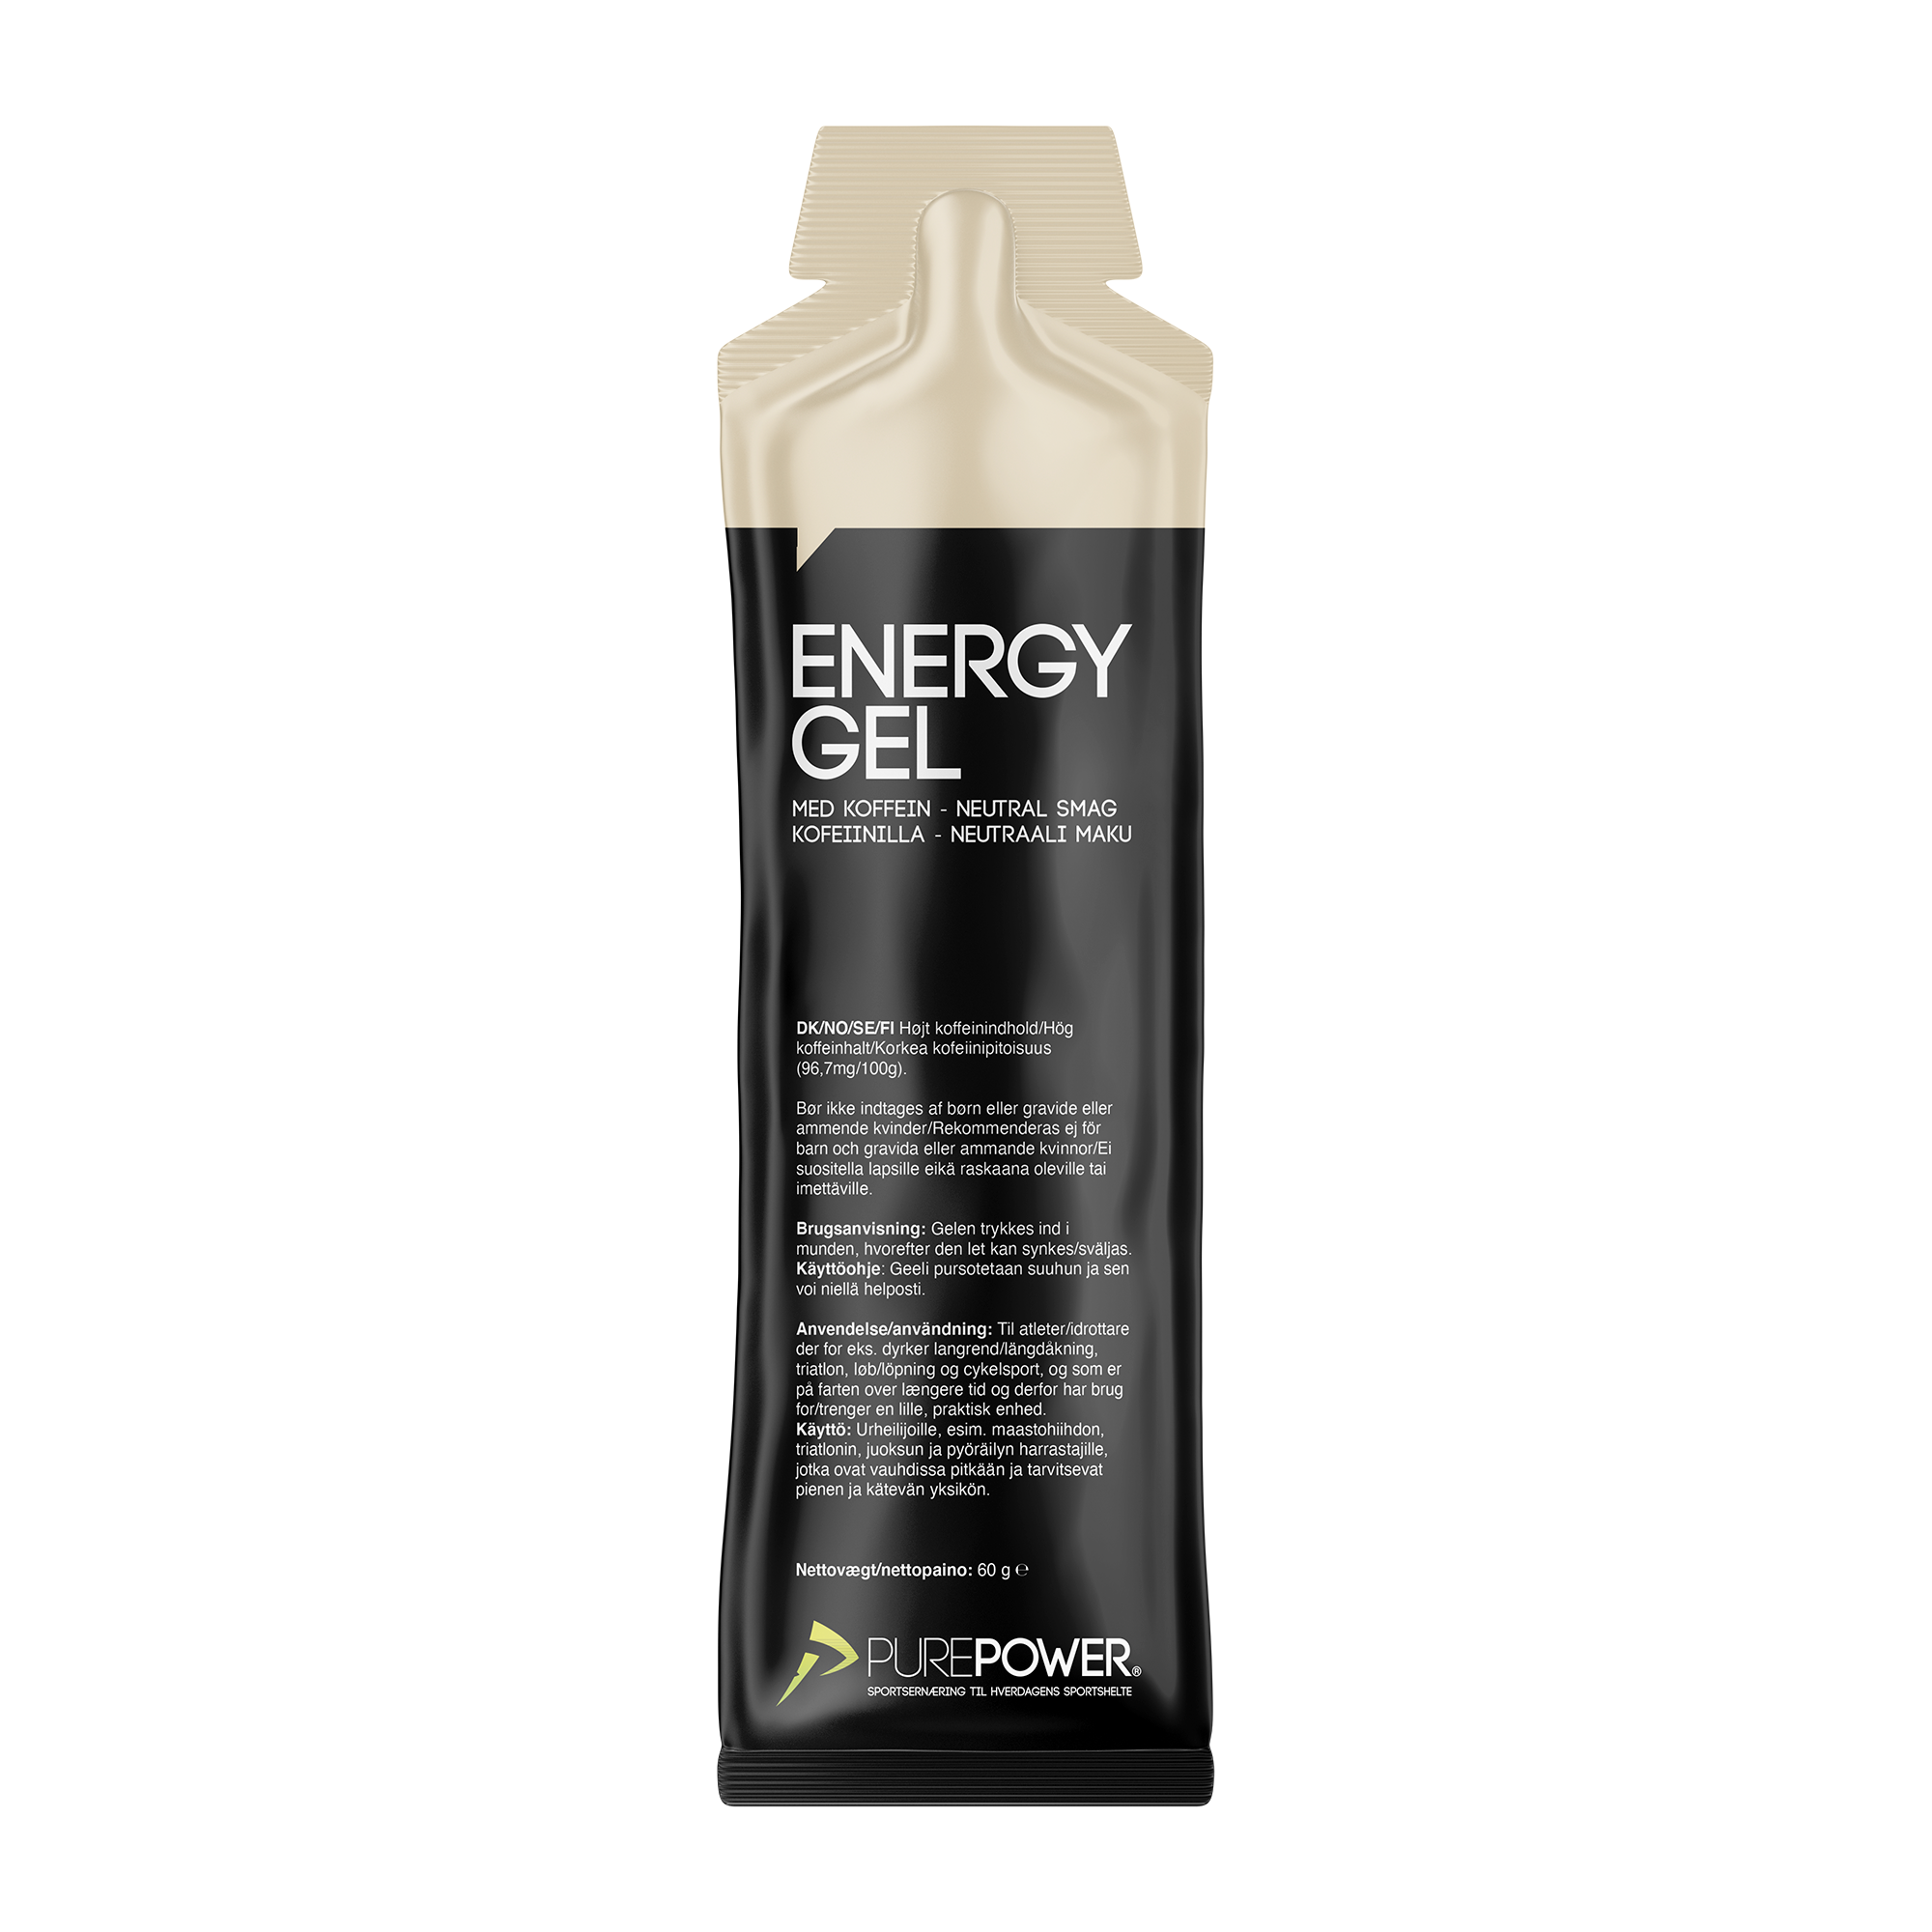 PurePower Gel, Energy Gel Caffeine 60g, Neutral